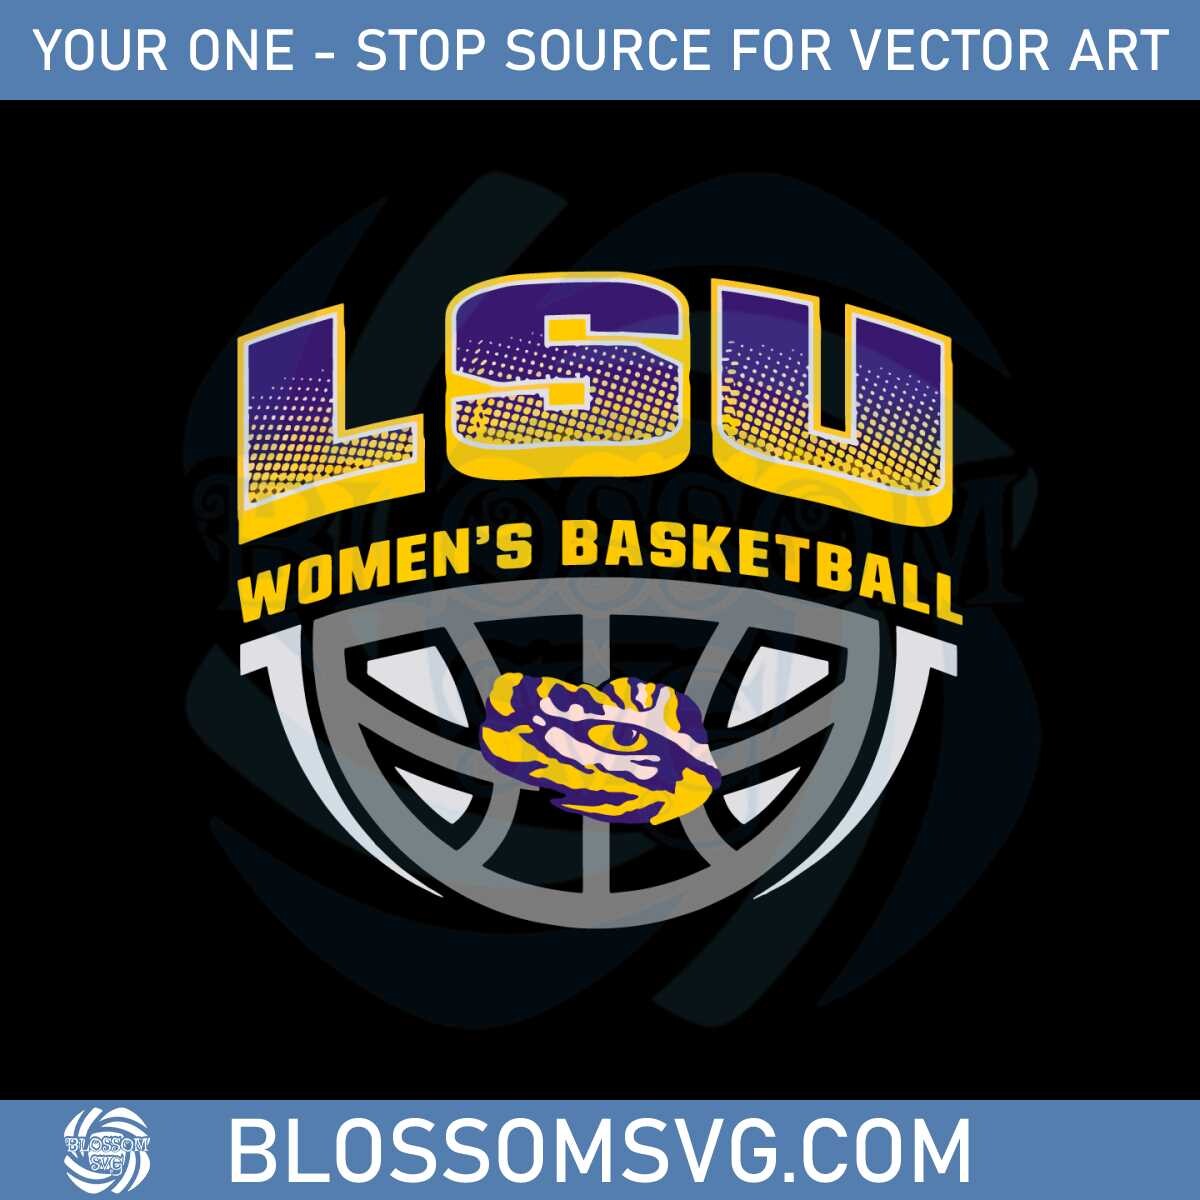 LSU Tigers 2023 NCAA Women’s Basketball National Champions Logo Svg